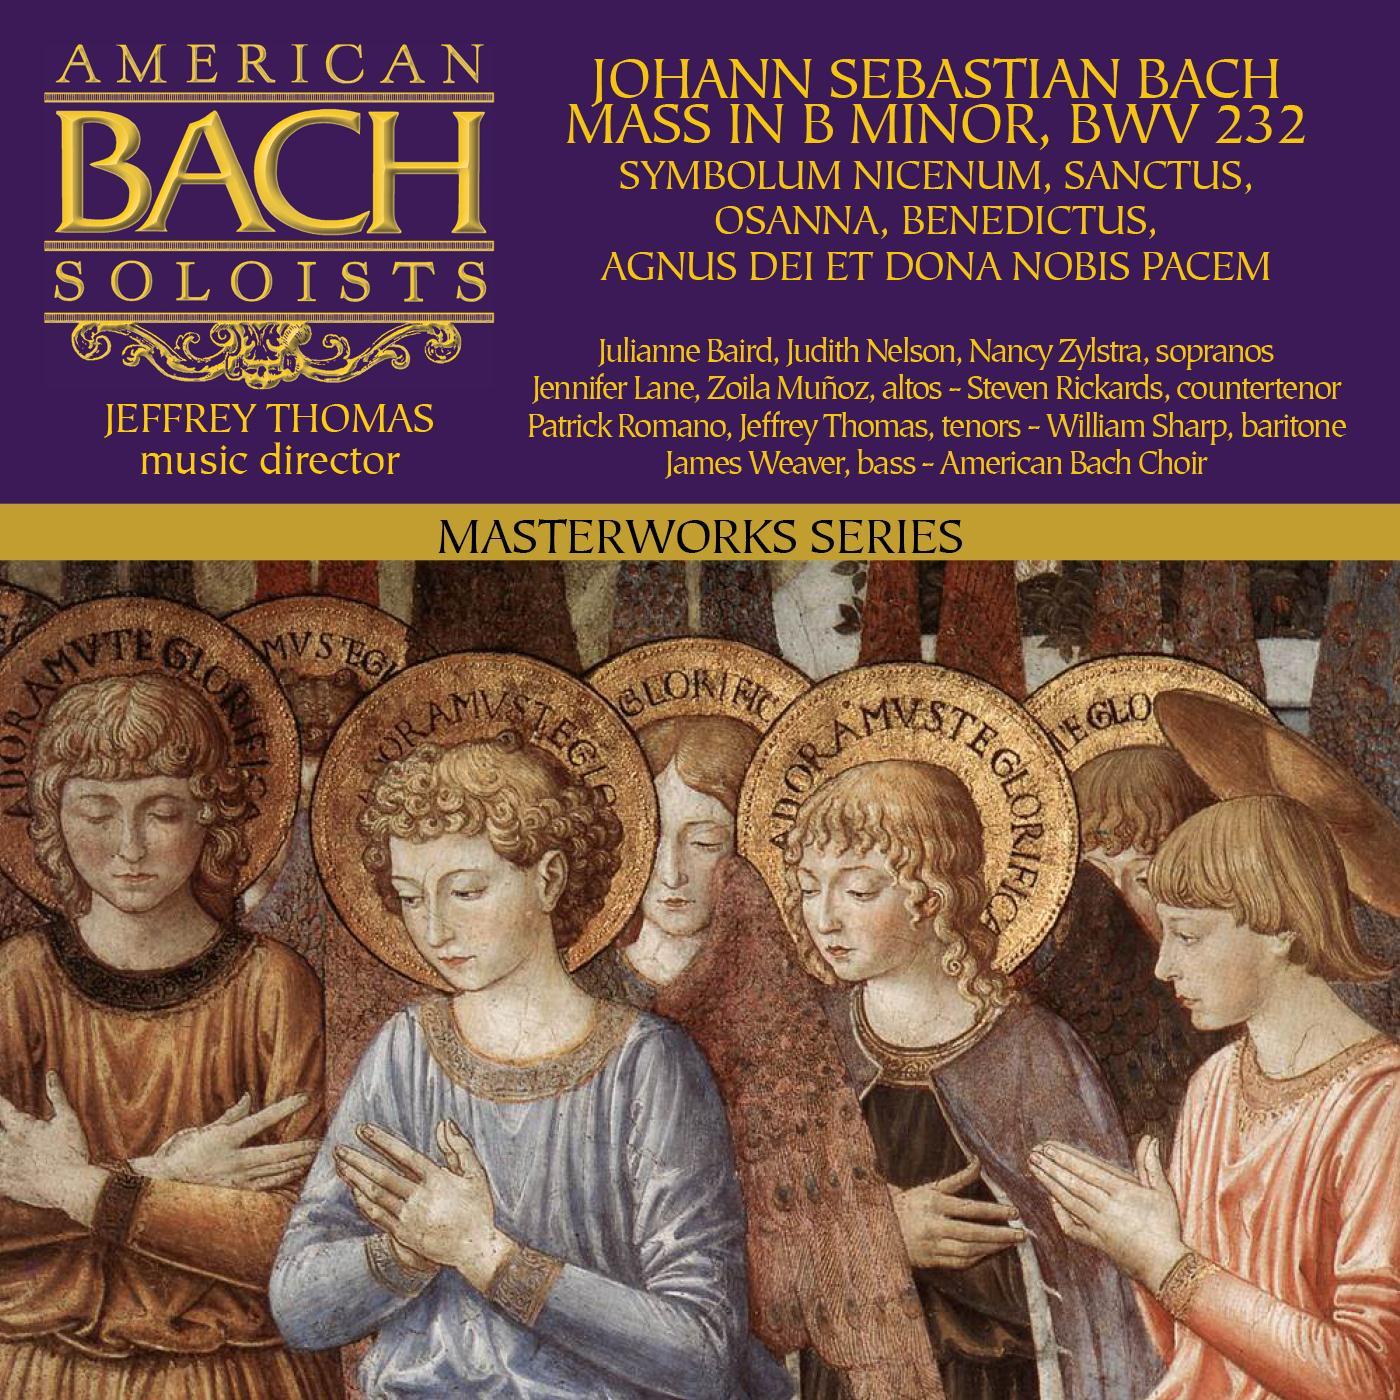 Mass in B Minor, BWV 232 Chorus: Patrem omnipotentem